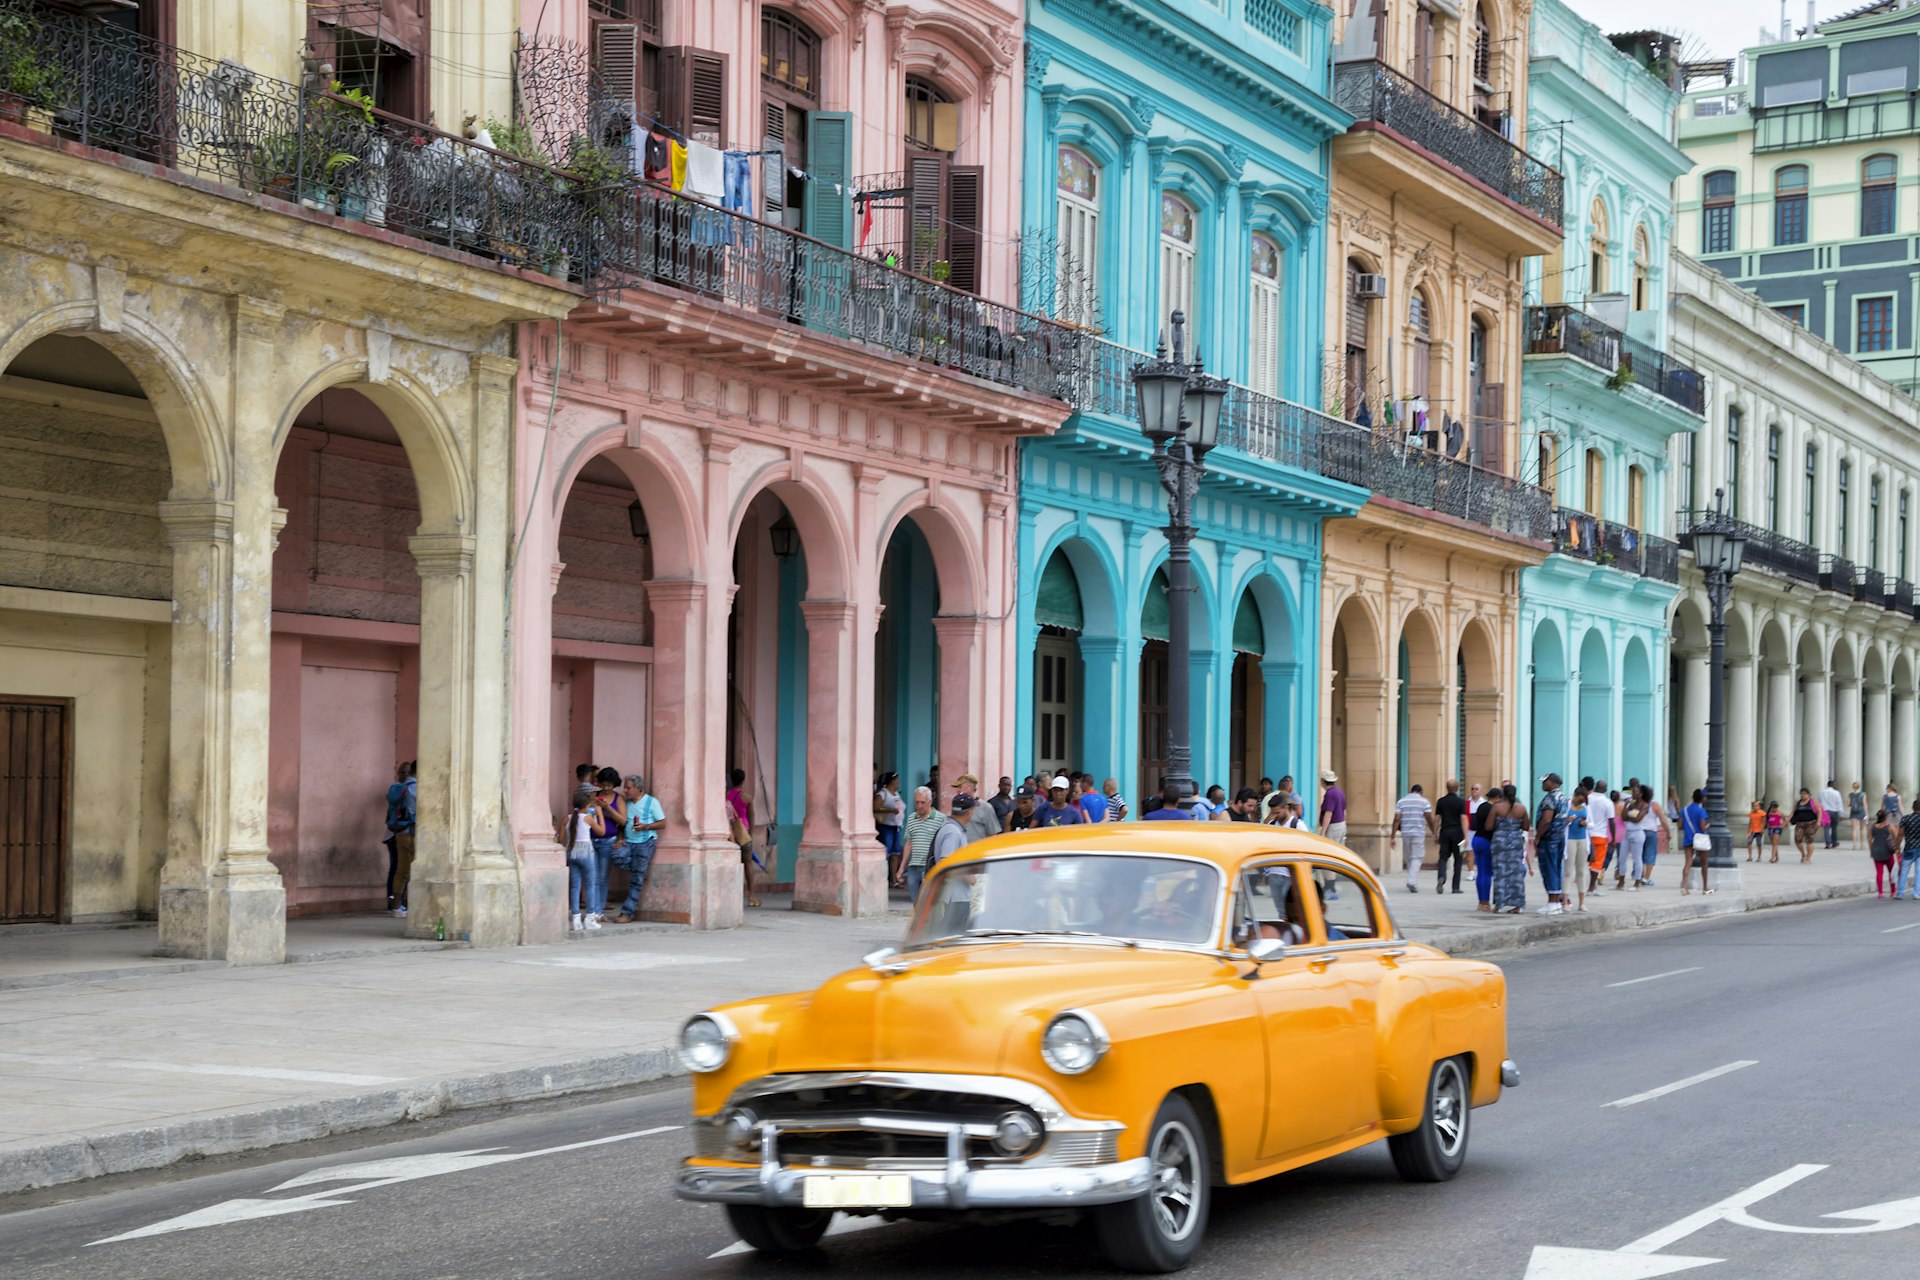 Vintage American car in front of colorful building in Old Havana, Cuba